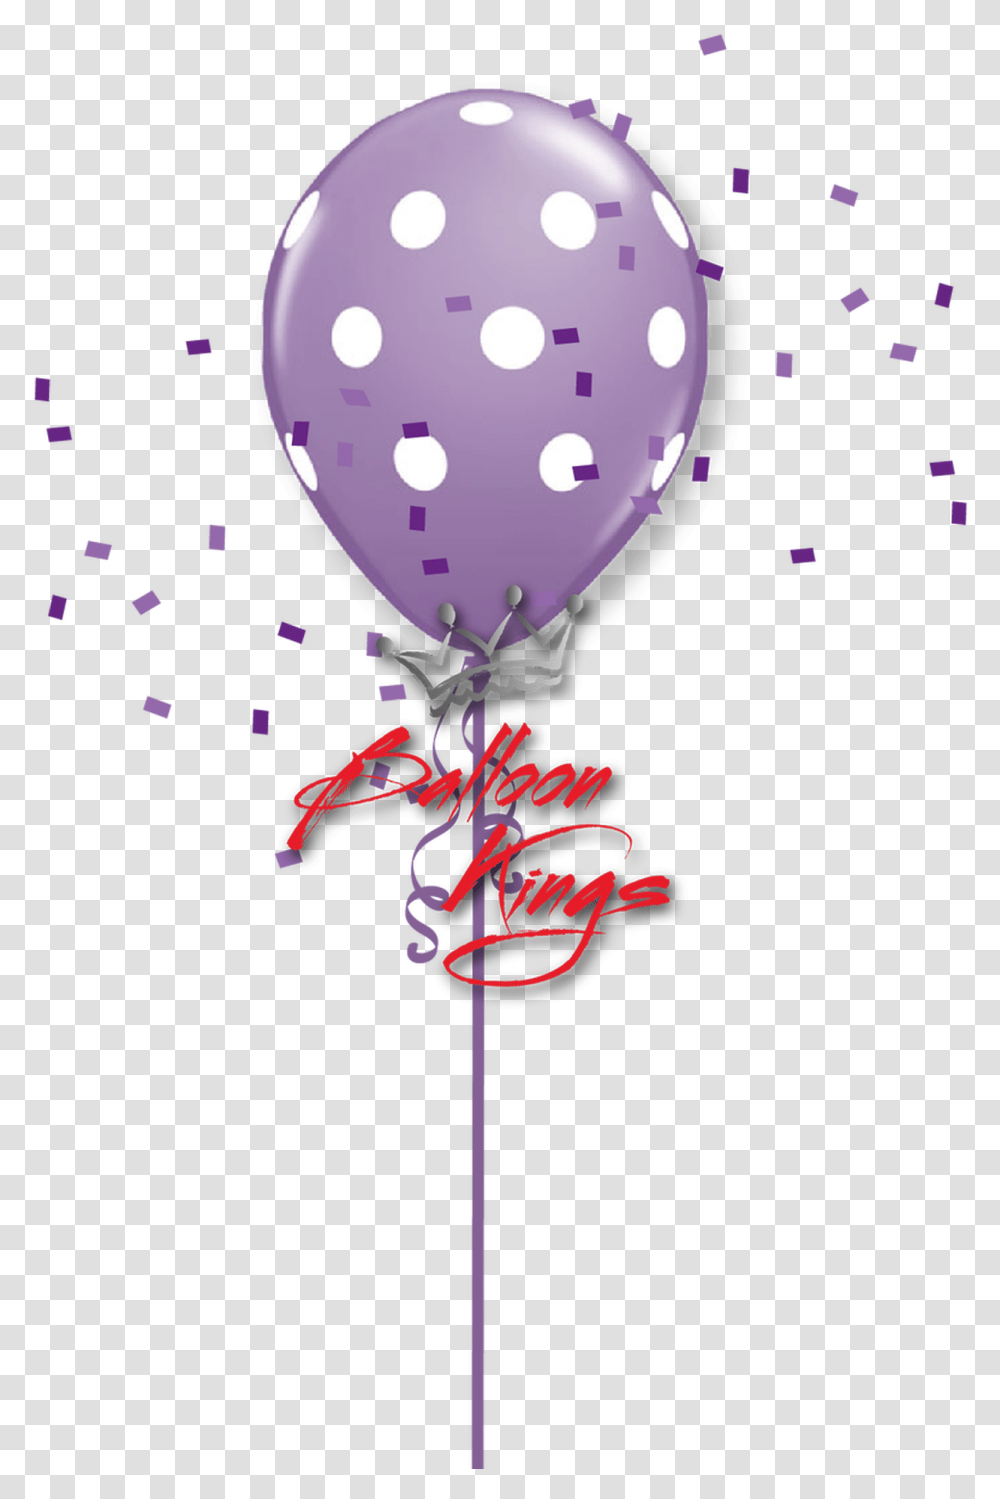 Lilac Polka Dots Portable Network Graphics, Ball, Balloon, Paper, Confetti Transparent Png